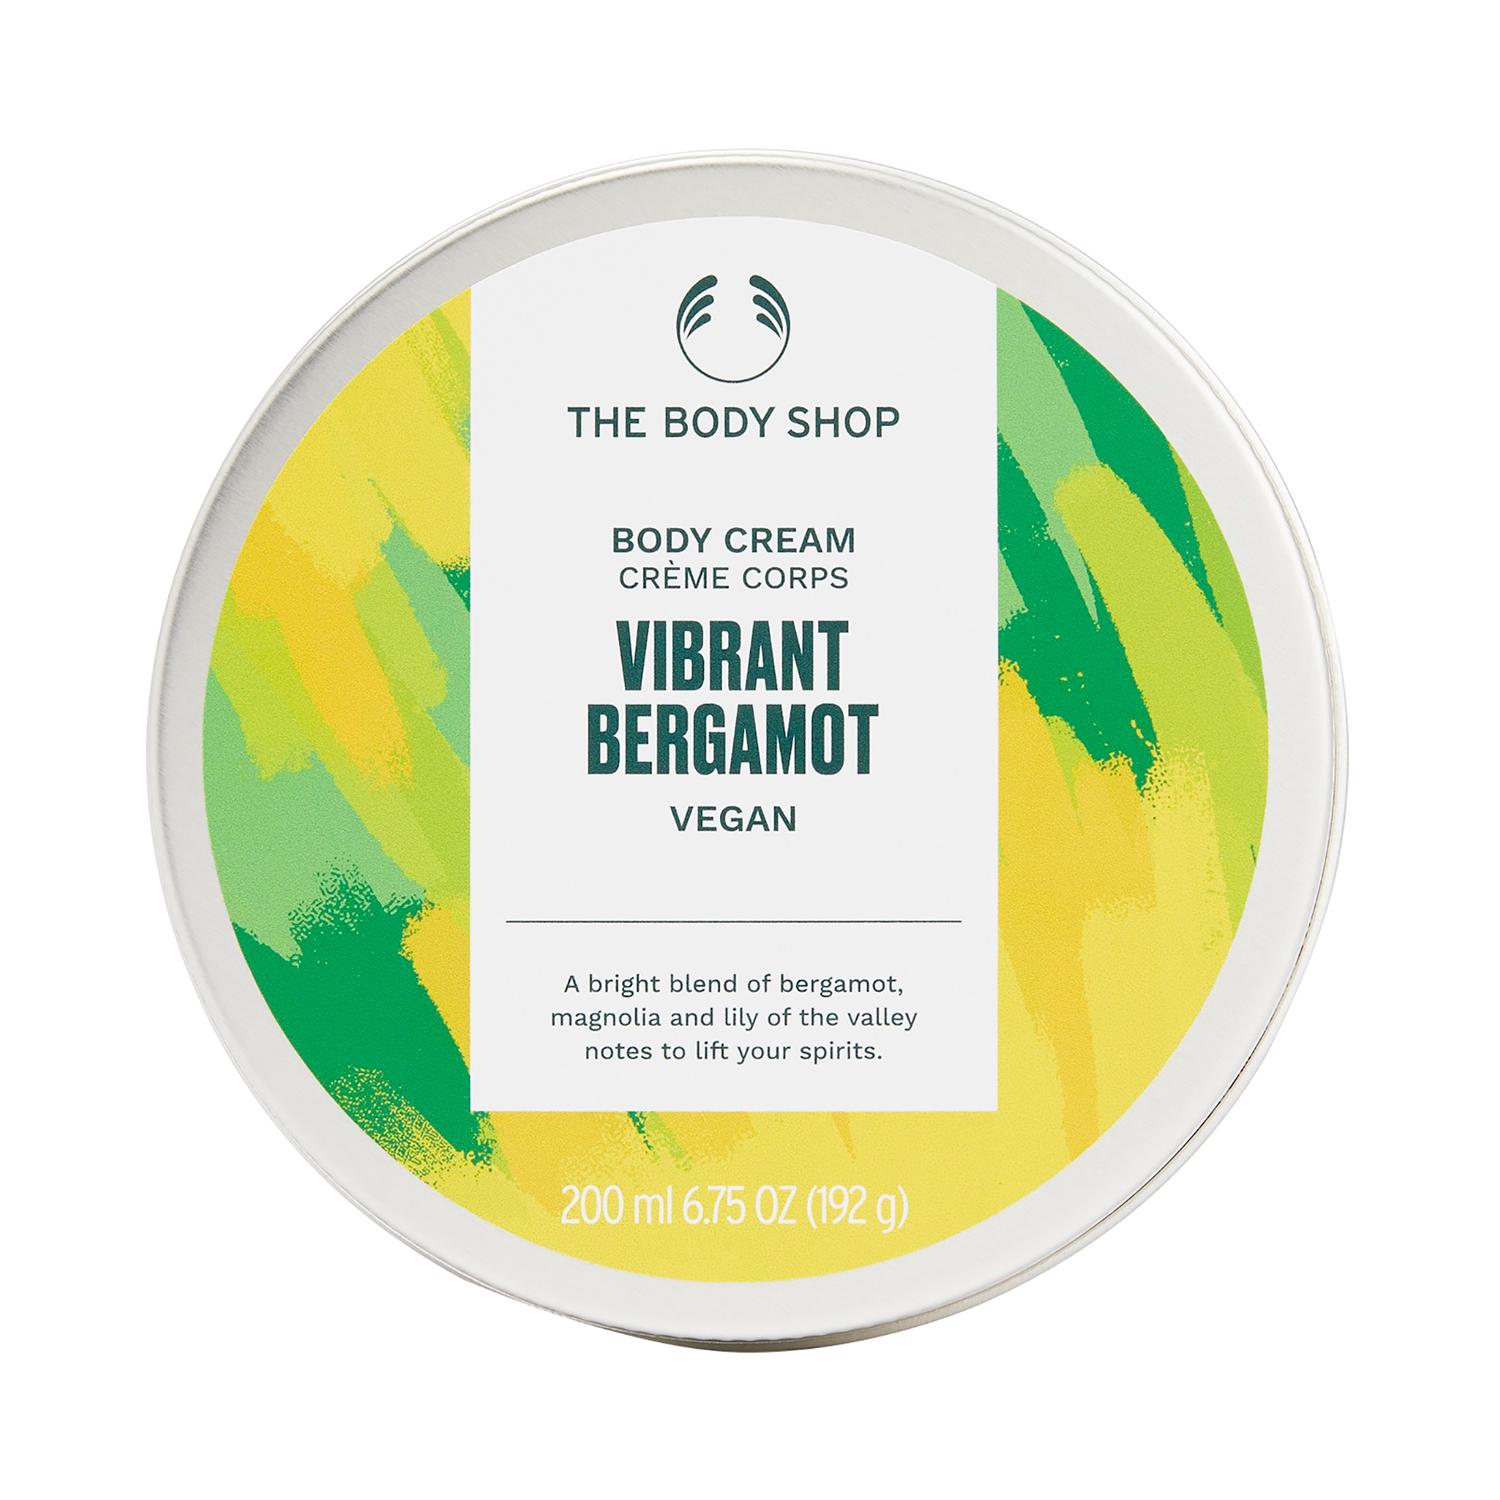 The Body Shop | The Body Shop Vibrant Bergamot Body Cream (200ml)